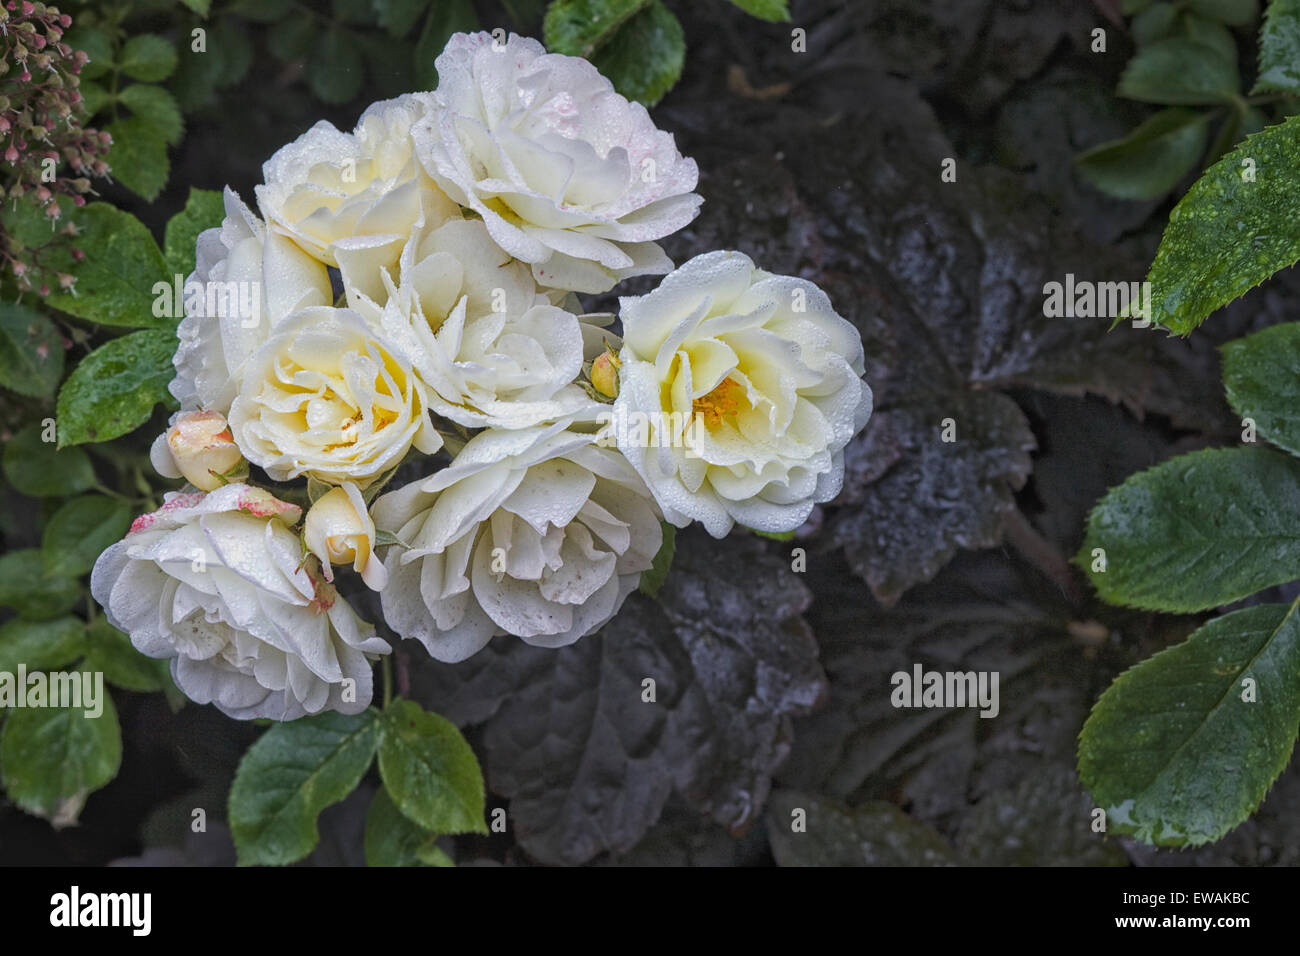 Chiusura del cluster bianca rose rampicanti Foto Stock